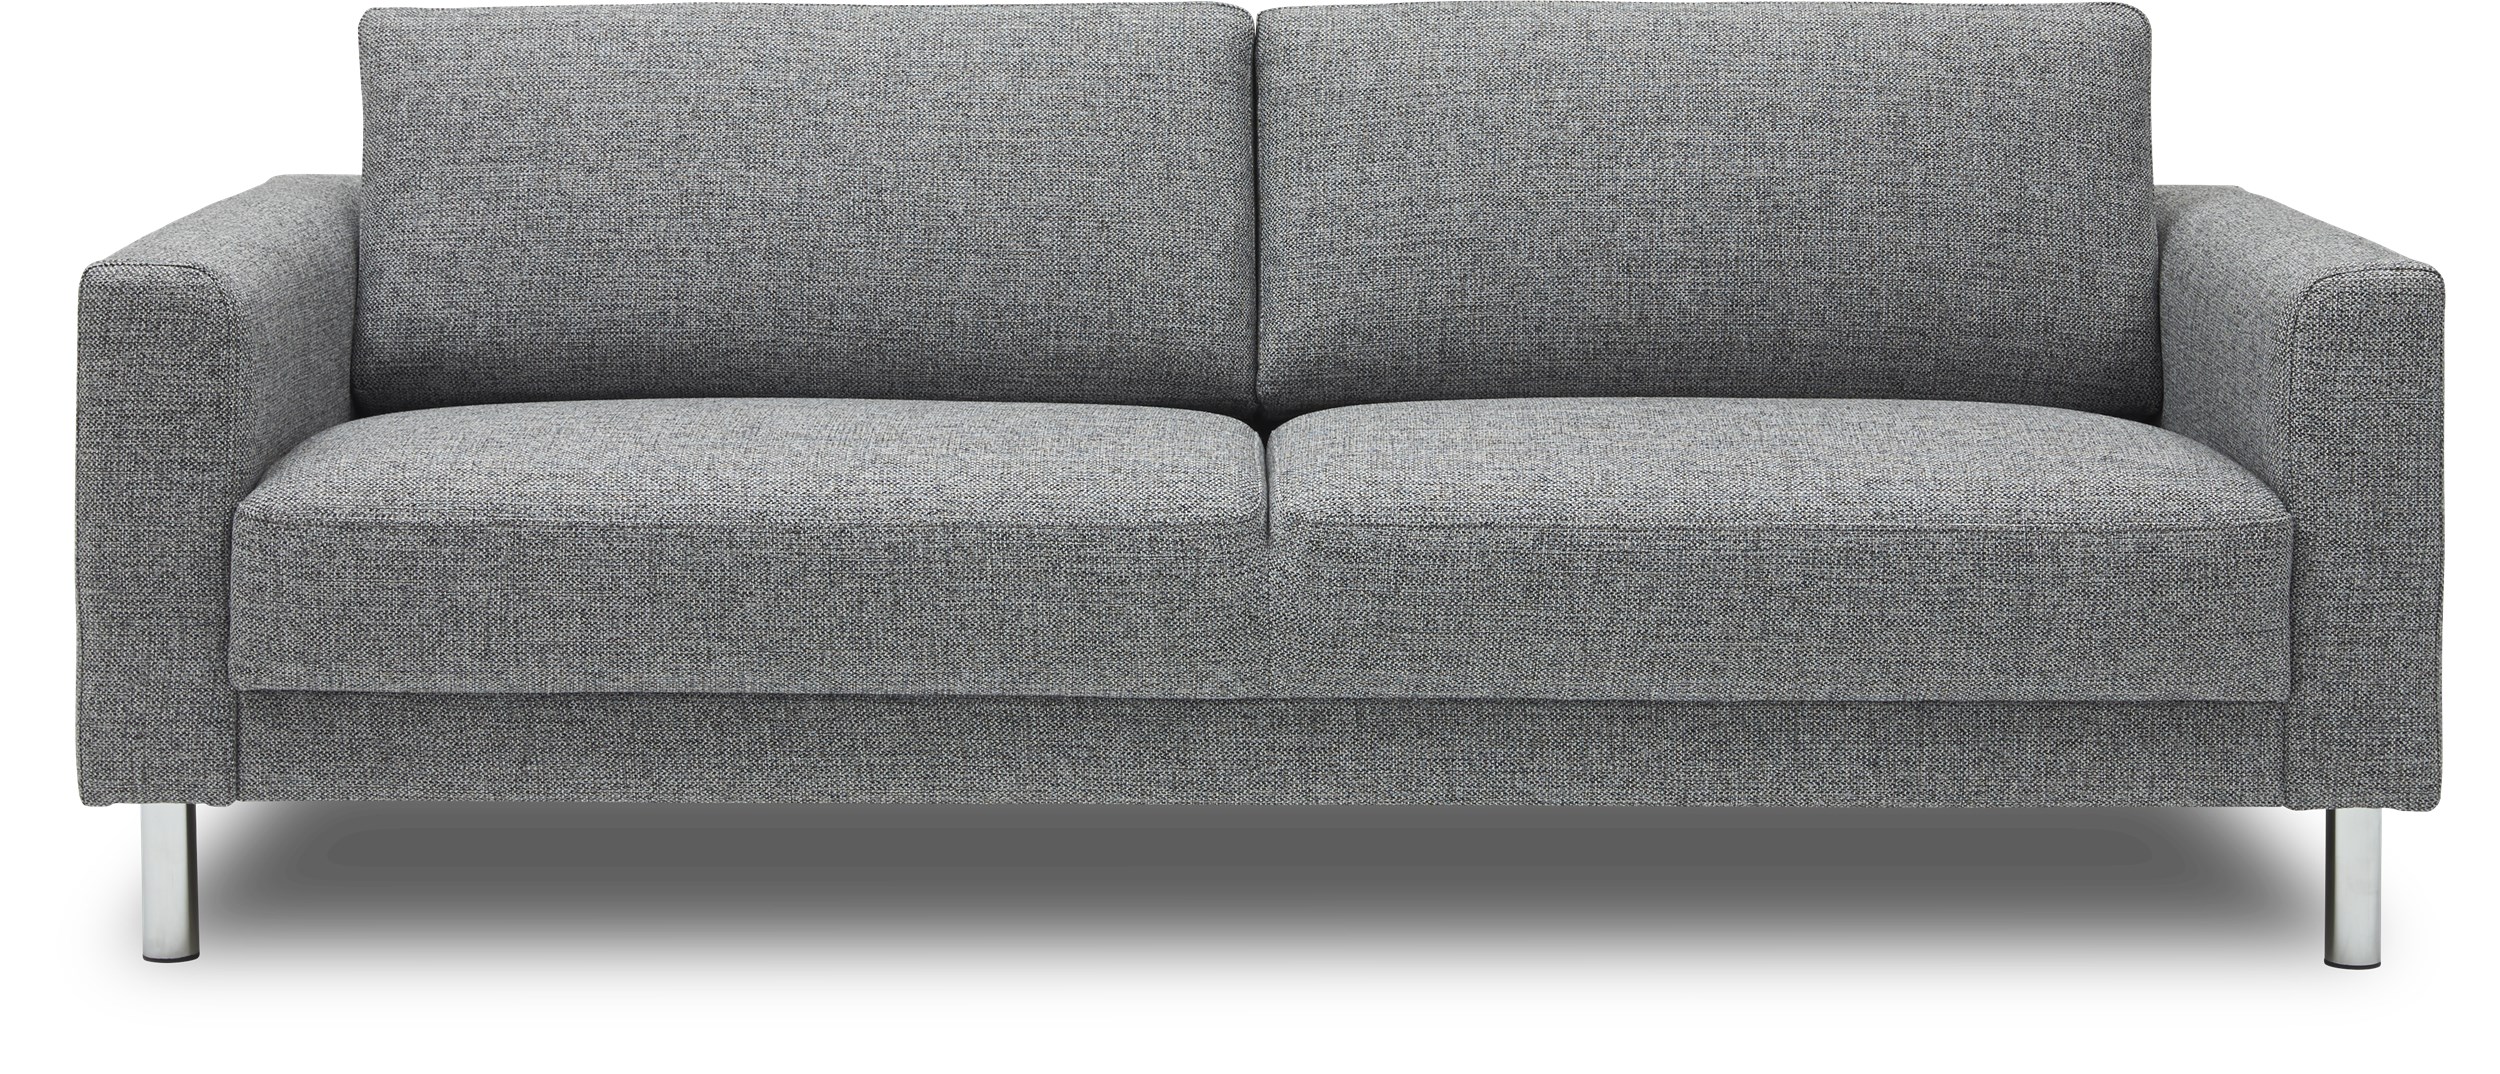 Cleveland 3 pers Sofa - Riviera 53 Light Grey stof, ben i krom og sæde i polyetherskum, ryg i polyetherskum